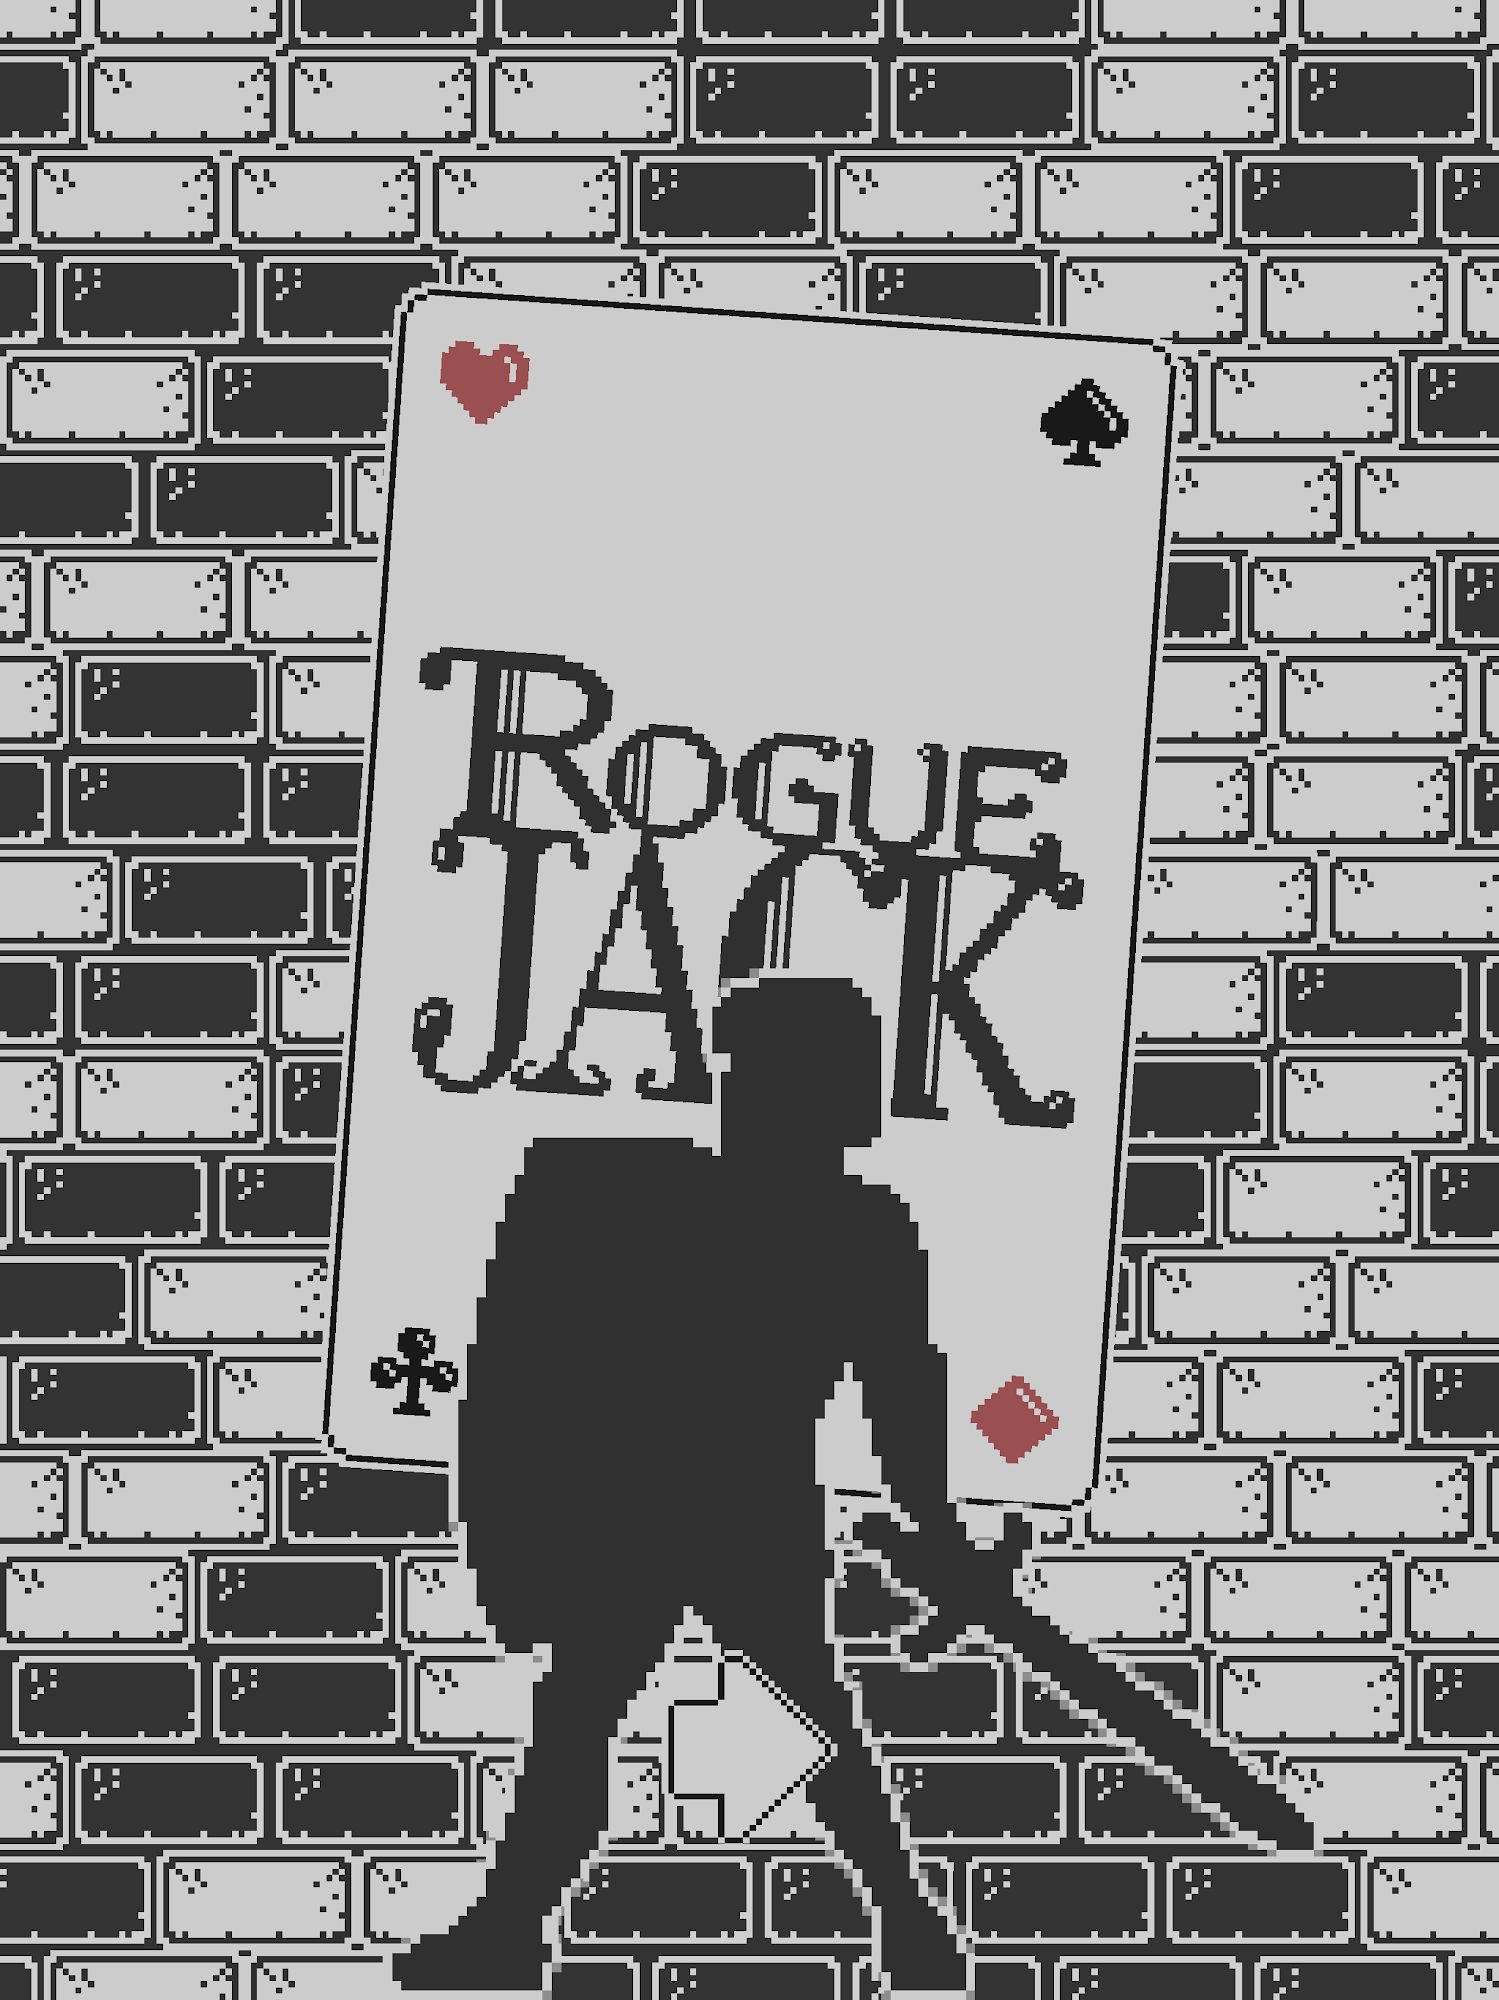 Download RogueJack: Roguelike BlackJack für Android kostenlos.